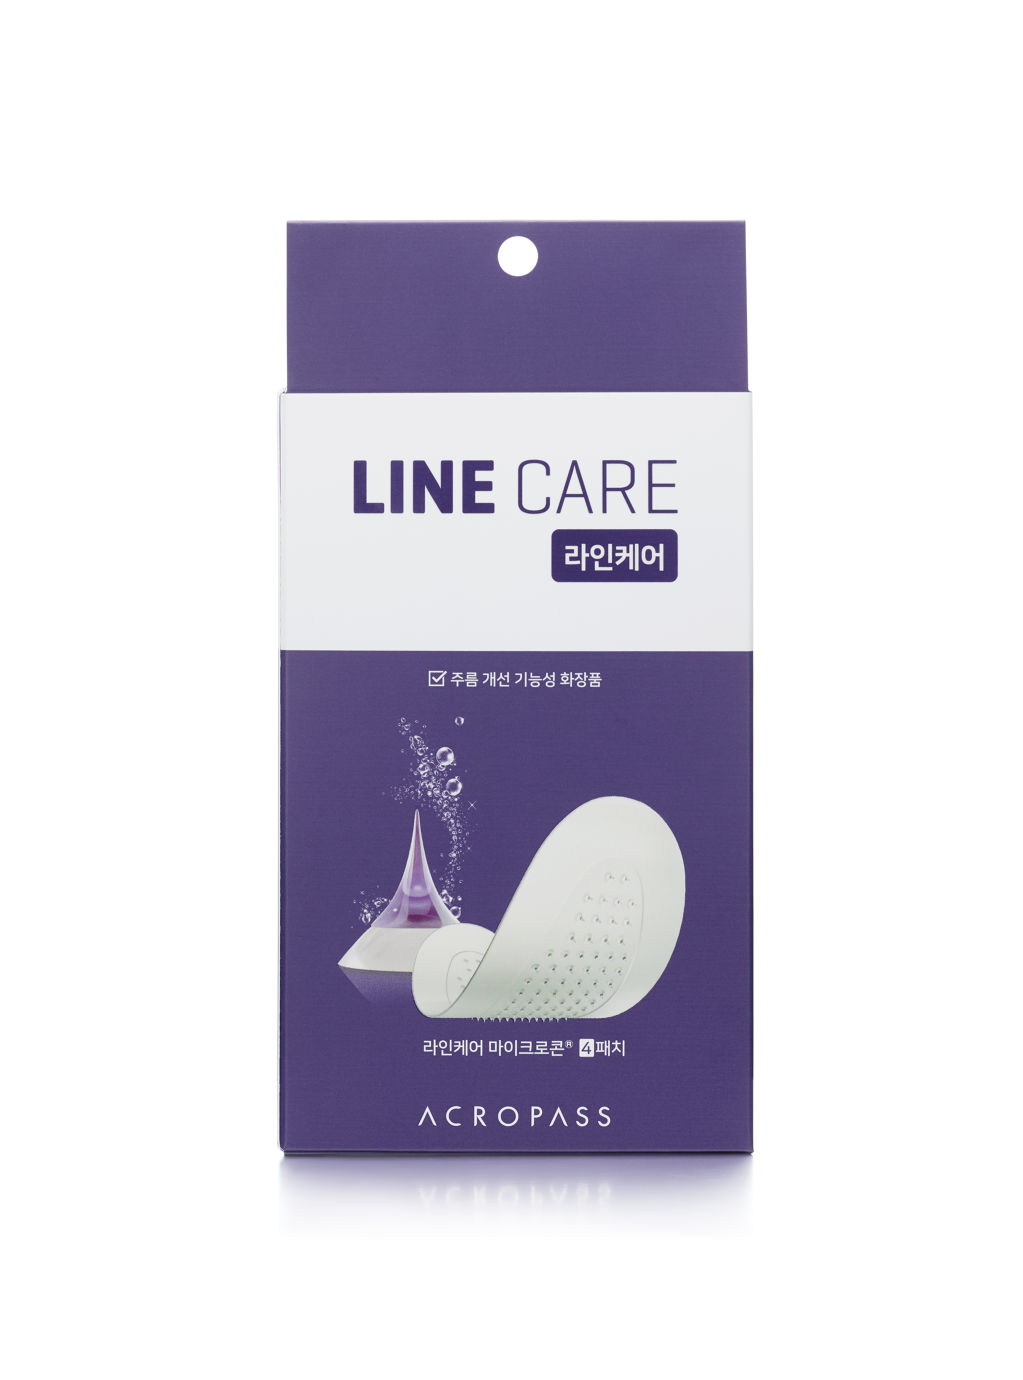 Acropass Line Care Patch - 2e8e8-LINE-CARE_Product-Arwork_01.png.jpg